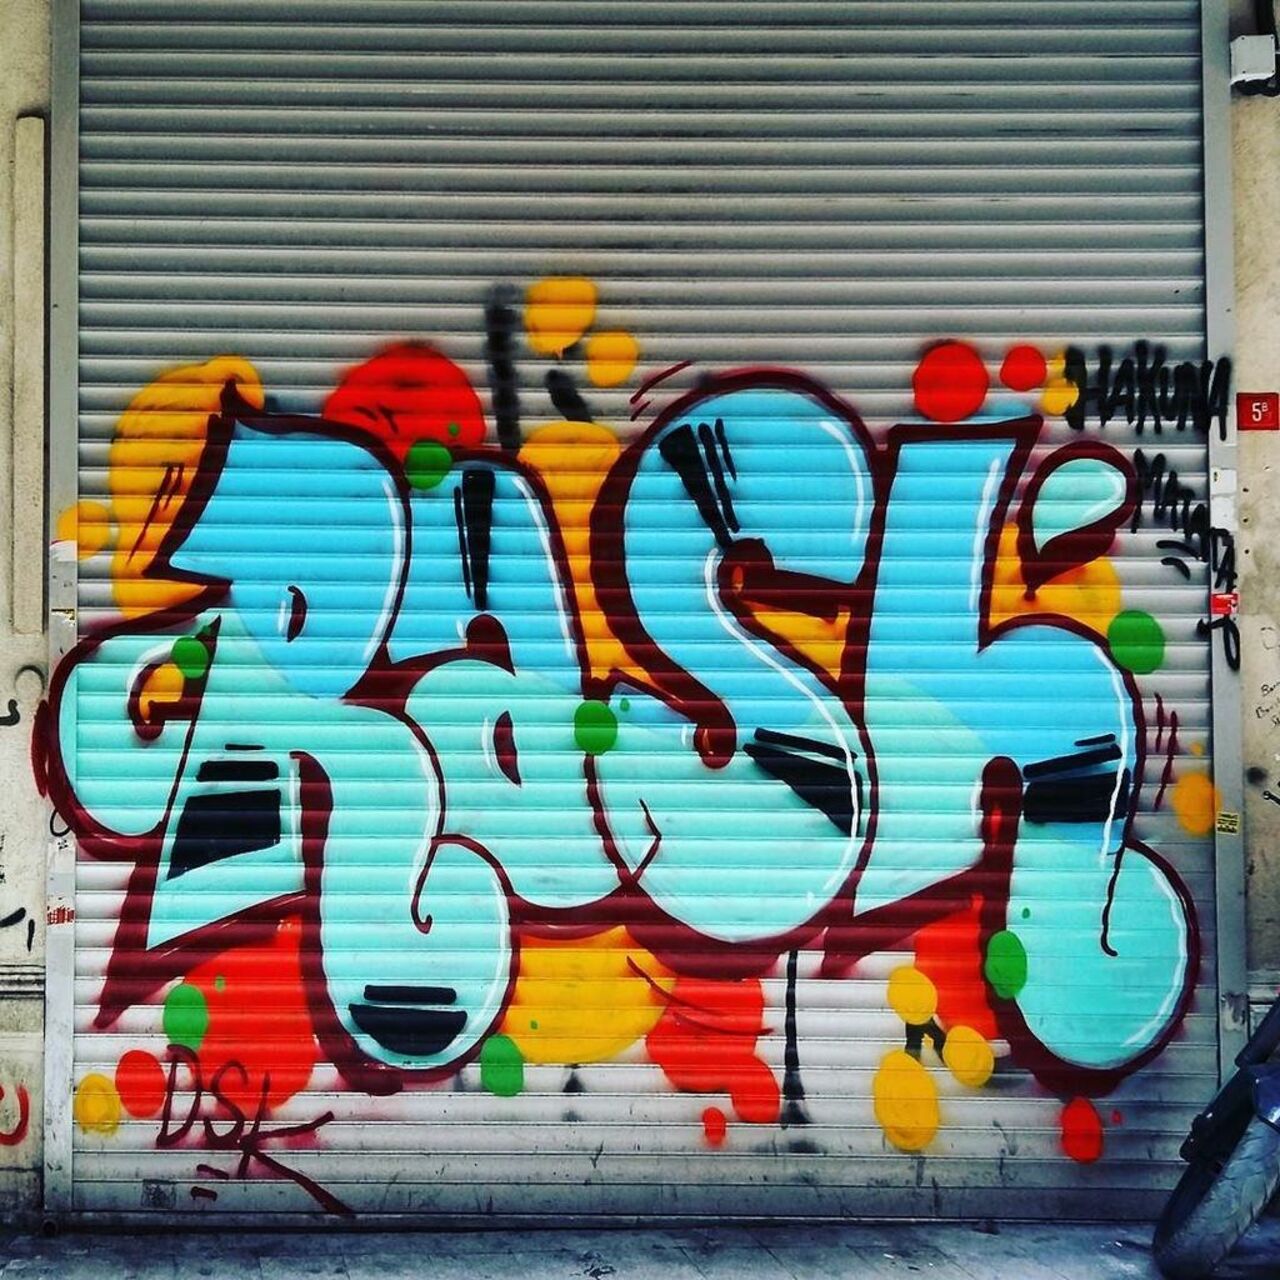 #dsb_graff @rsa_graffiti #ingf@streetawesome #streetart #urbanart #graffitiart #graffiti #instagraffiti #streetartp… https://t.co/WUx1UOLKpo